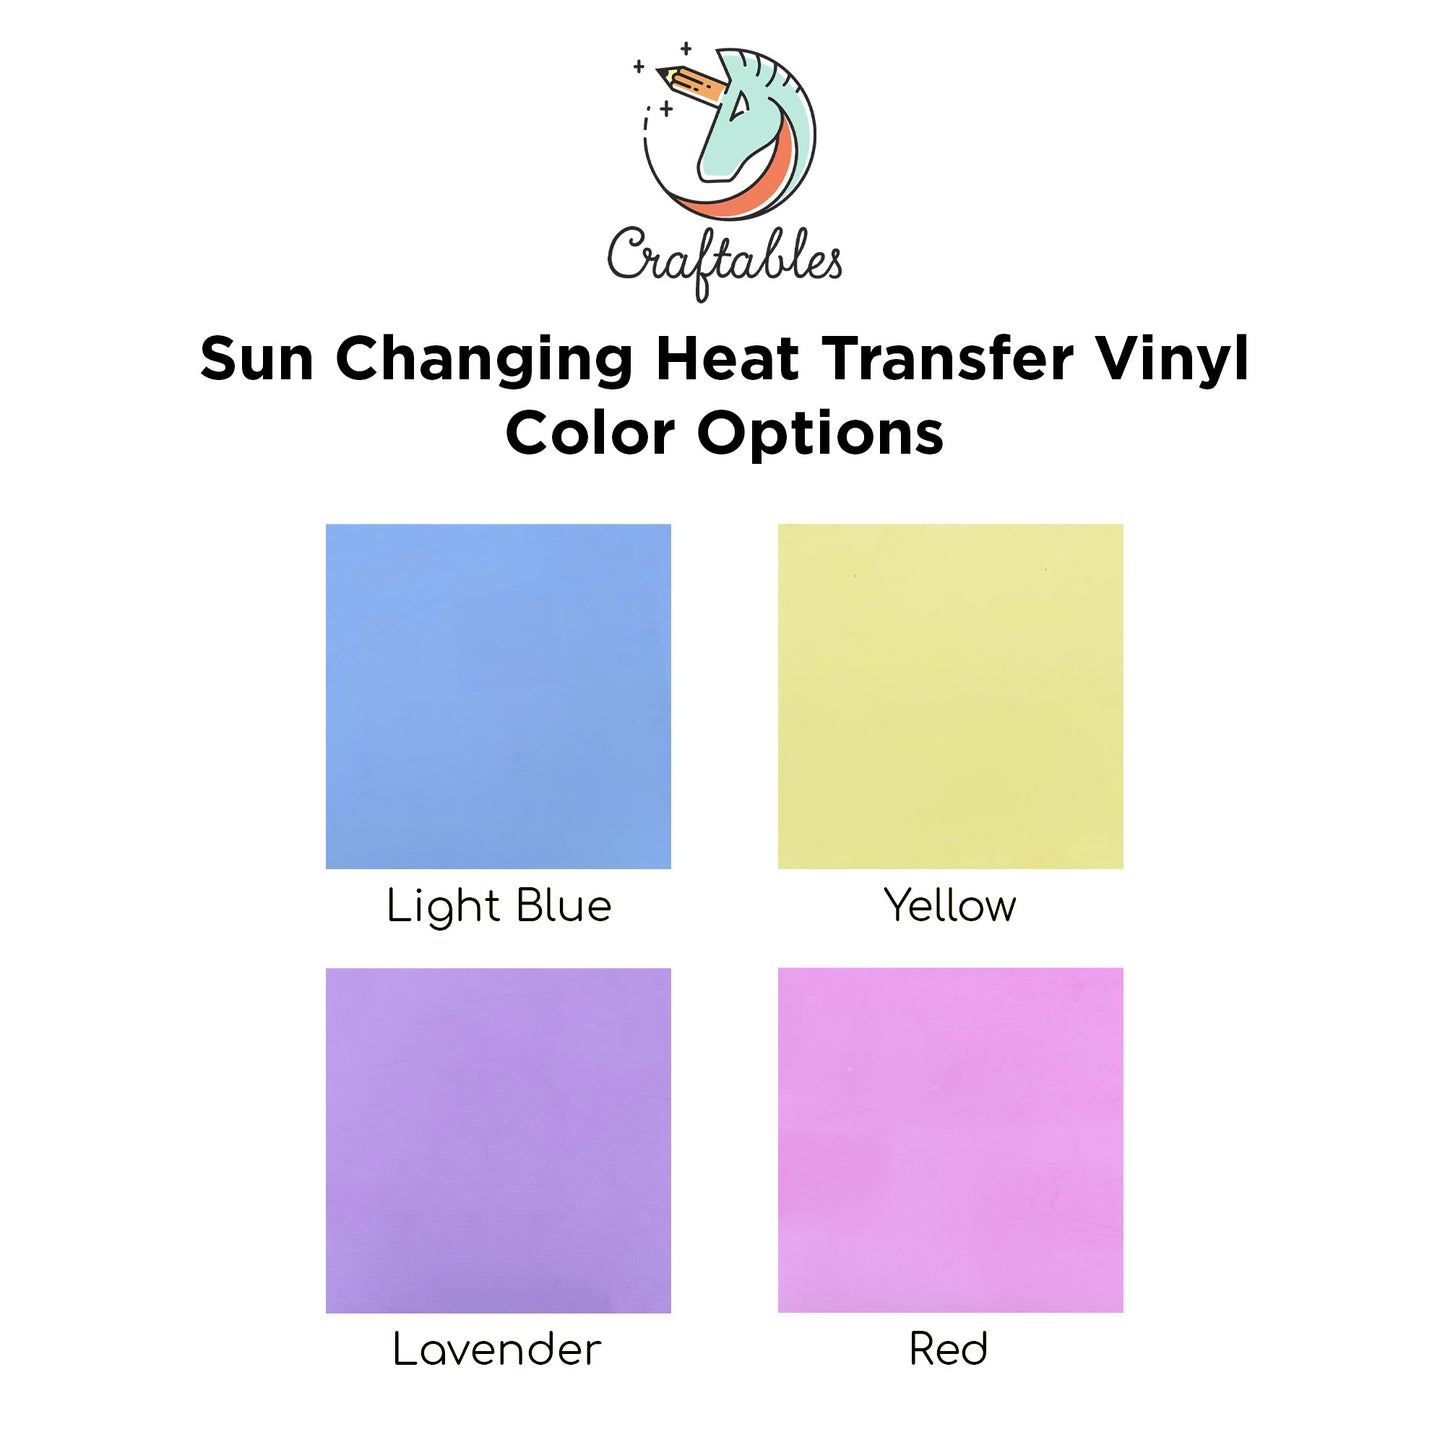 Yellow Light Changing Heat Transfer Vinyl Rolls By Craftables